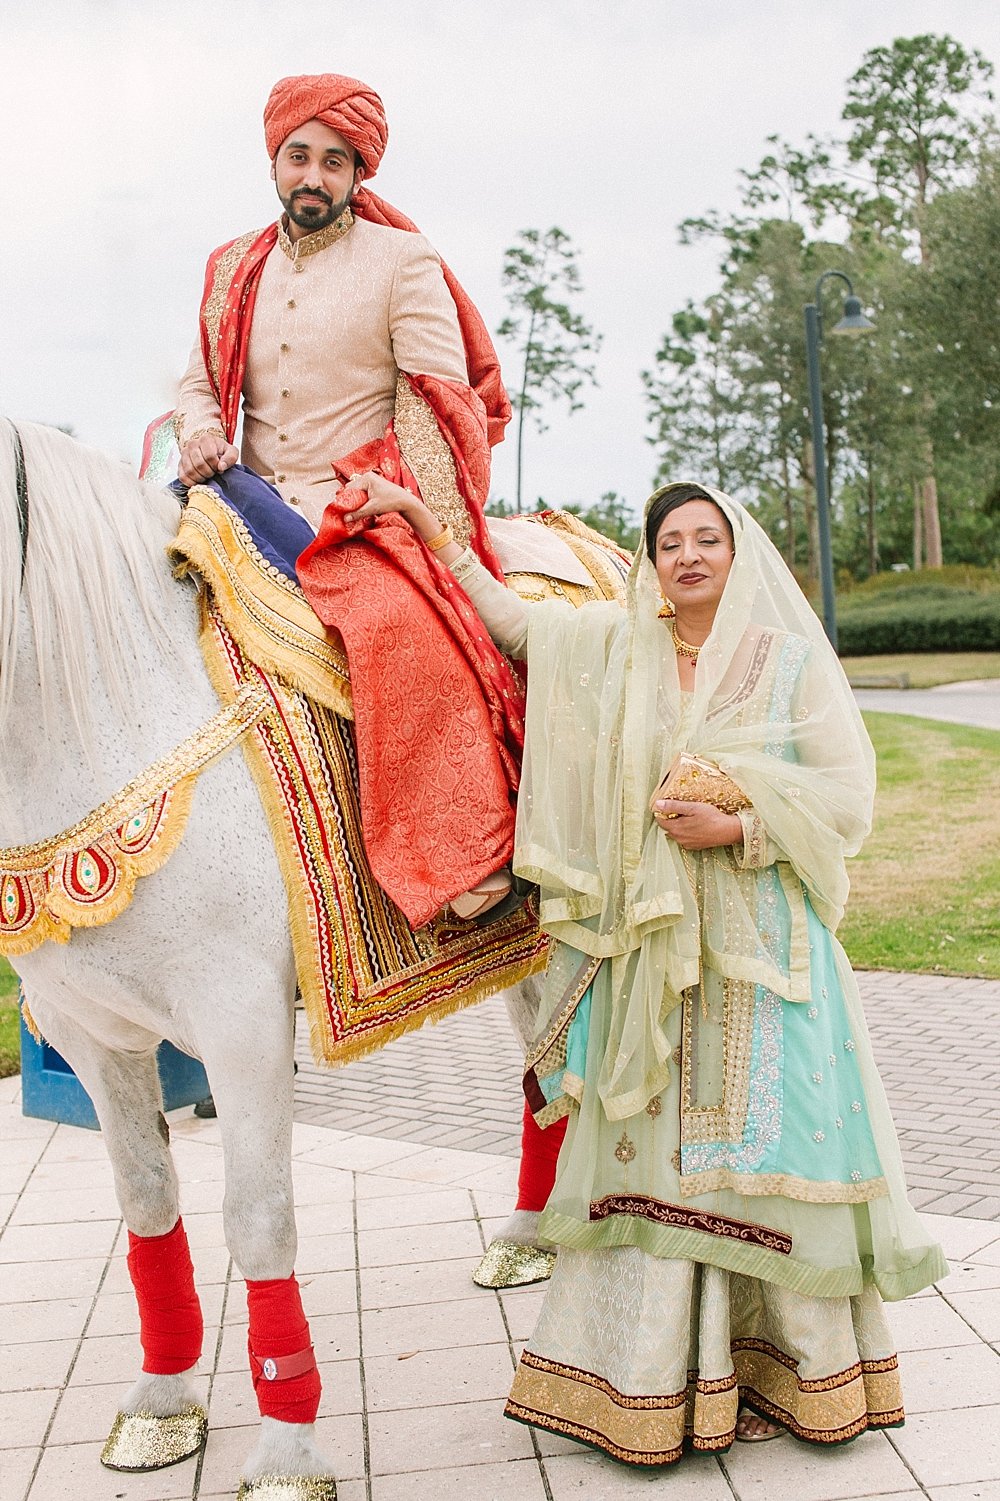 Colorful Indian Wedding Hilton Bonnet Creek Waldorf Astoria - Florida Wedding - Film Photographer | Ashley Holstein Photography